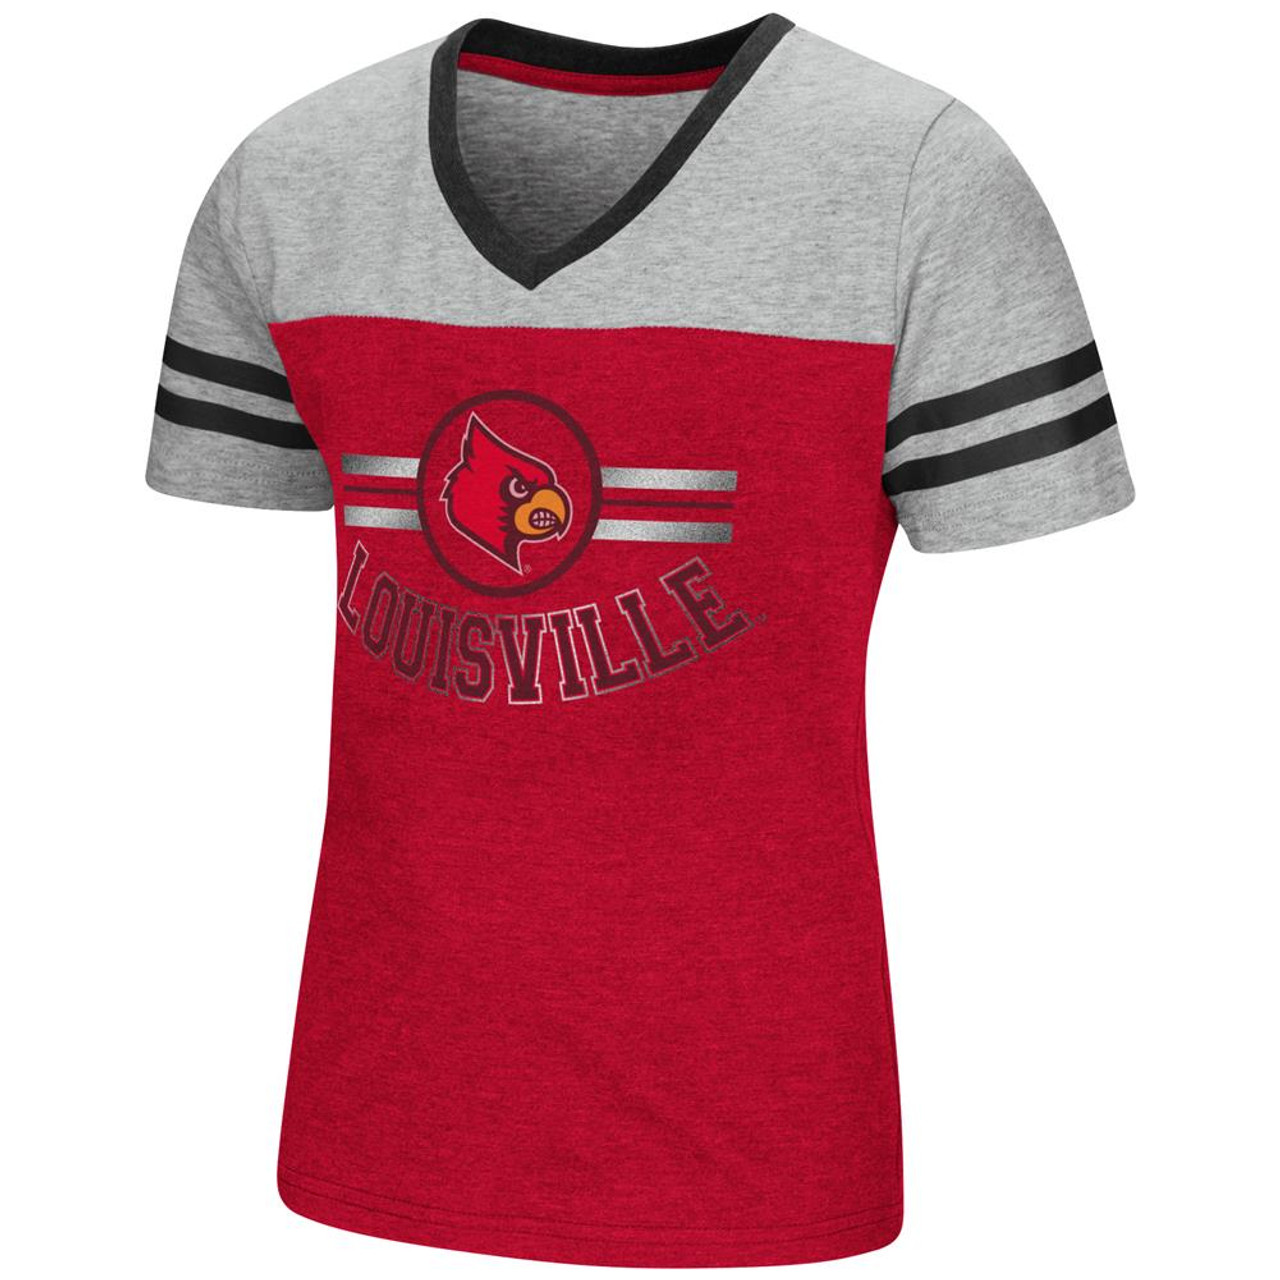 ADIDAS boys girls size LARGE NCAA Short-Sleeve T-Shirt Louisville Cardinals